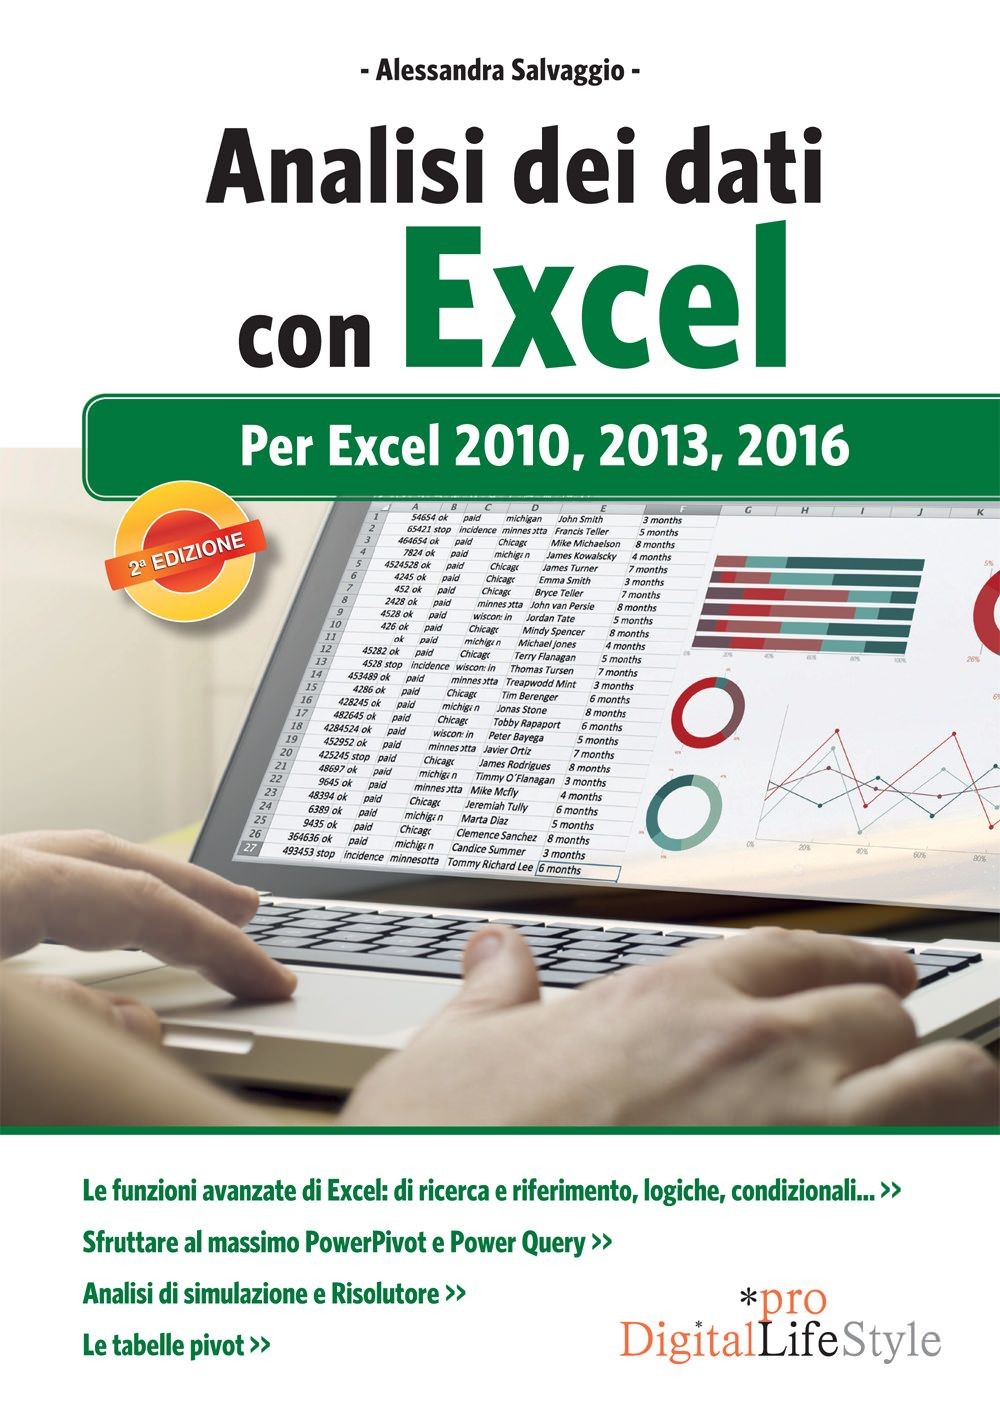 Analisi dei dati con Excel: per Excel 2010, 2013, 2016 - Librerie.coop